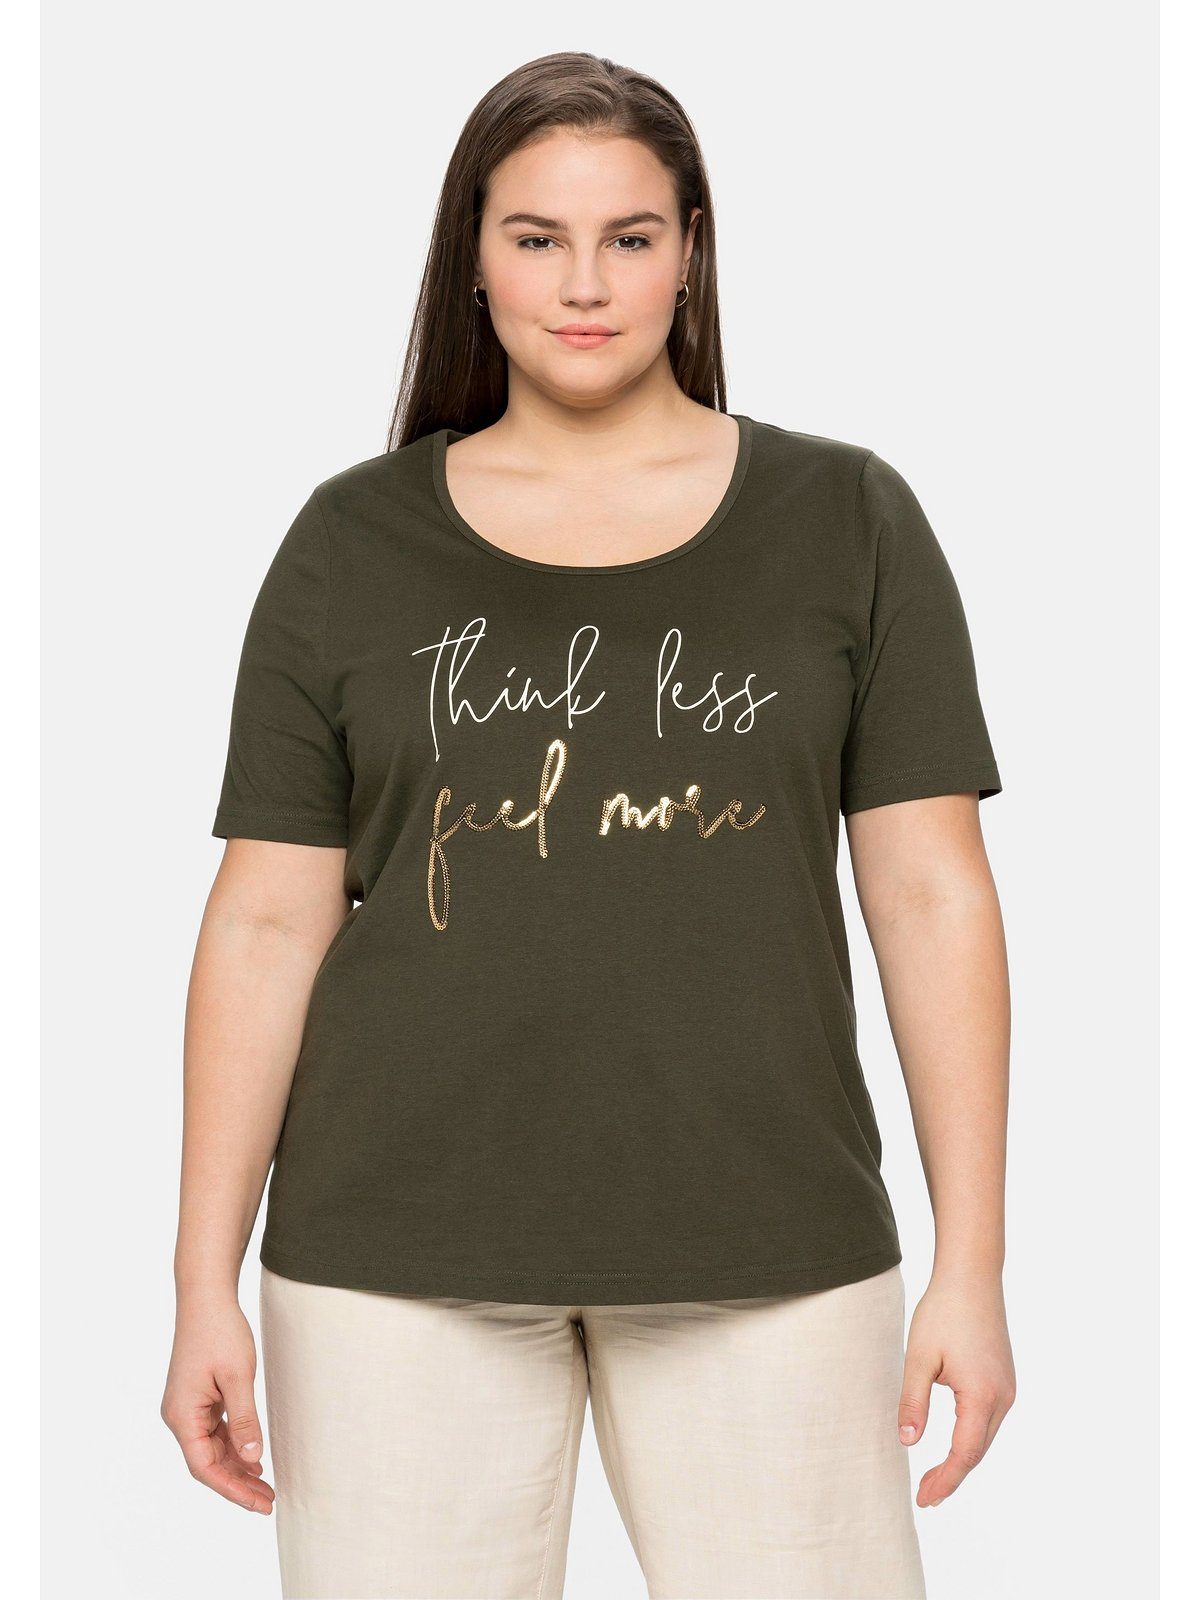 Sheego T-Shirt Große Größen mit schimmerndem Pailletten-Schriftzug | T-Shirts